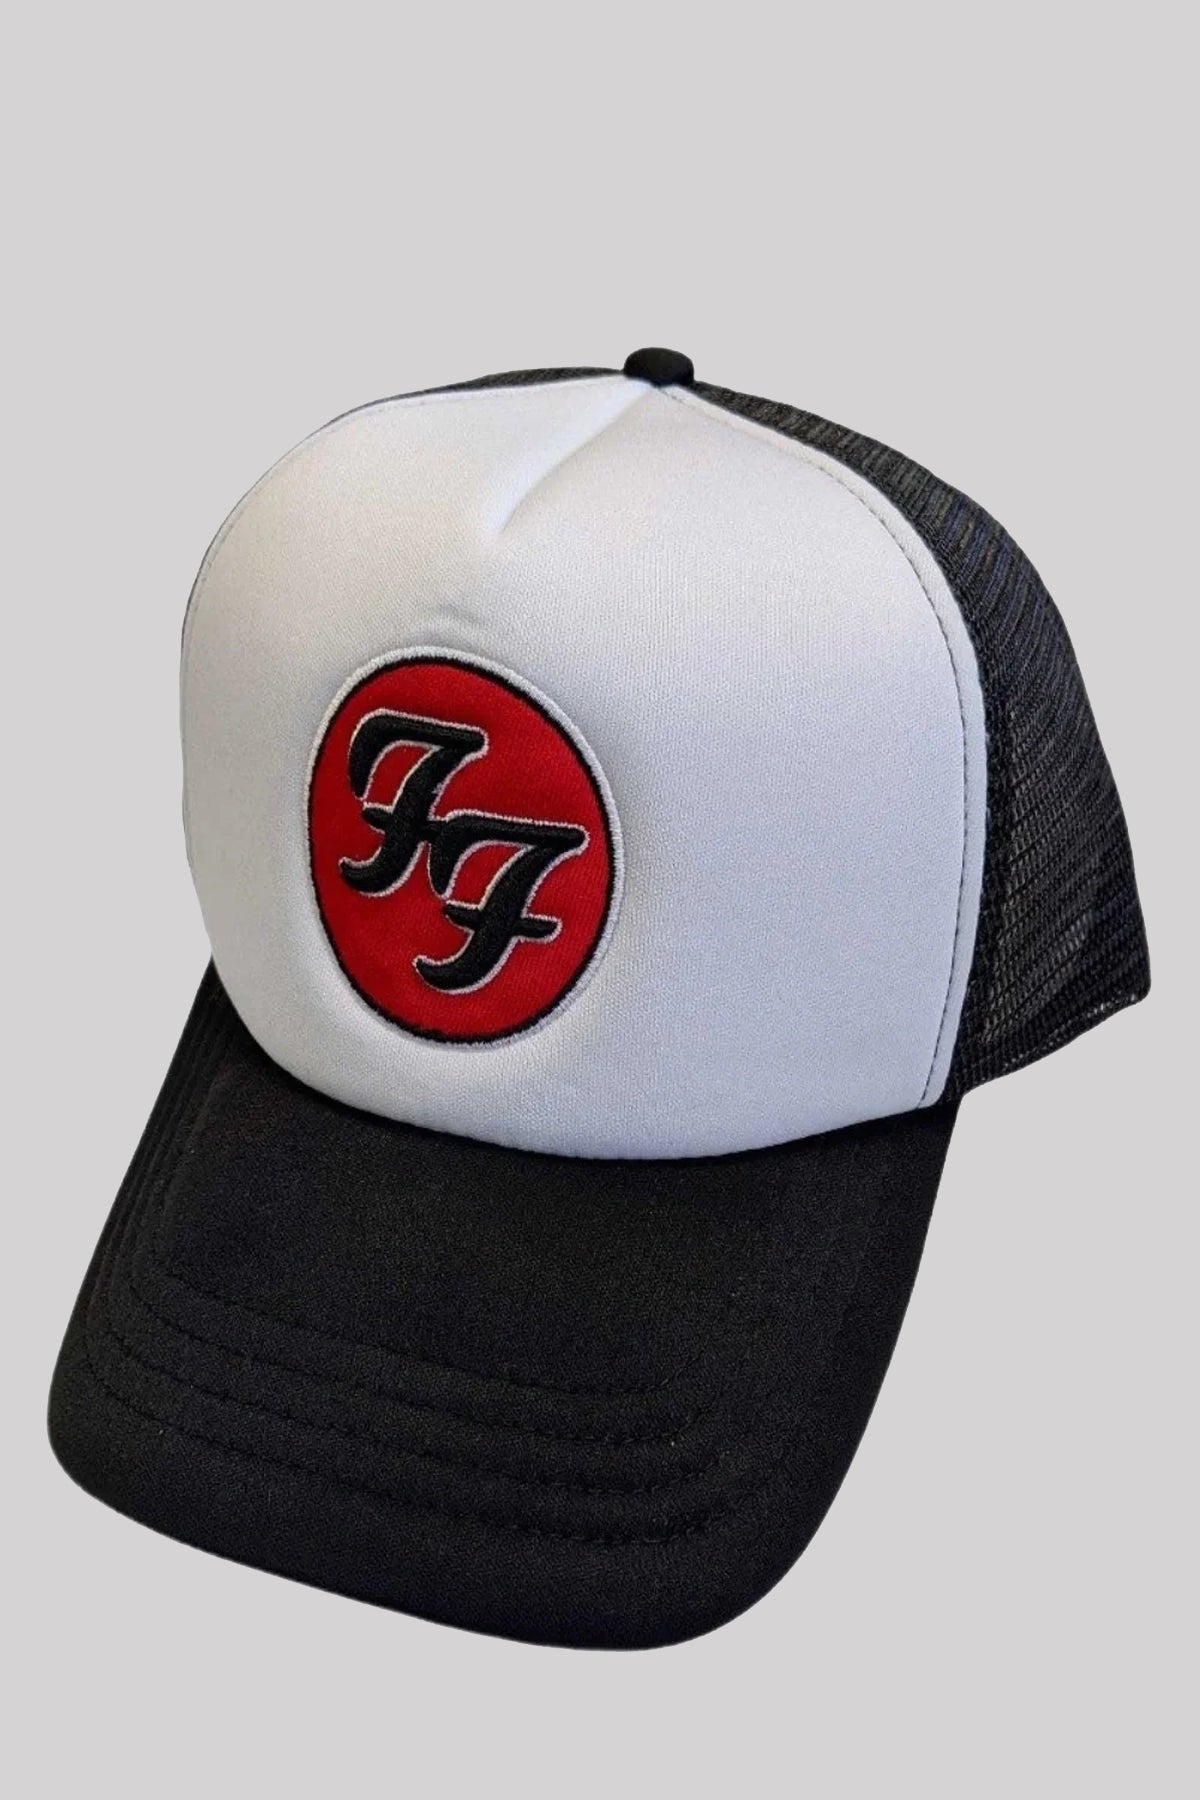 Foo Fighters Unisex Mesh Back Cap: Ff Logo